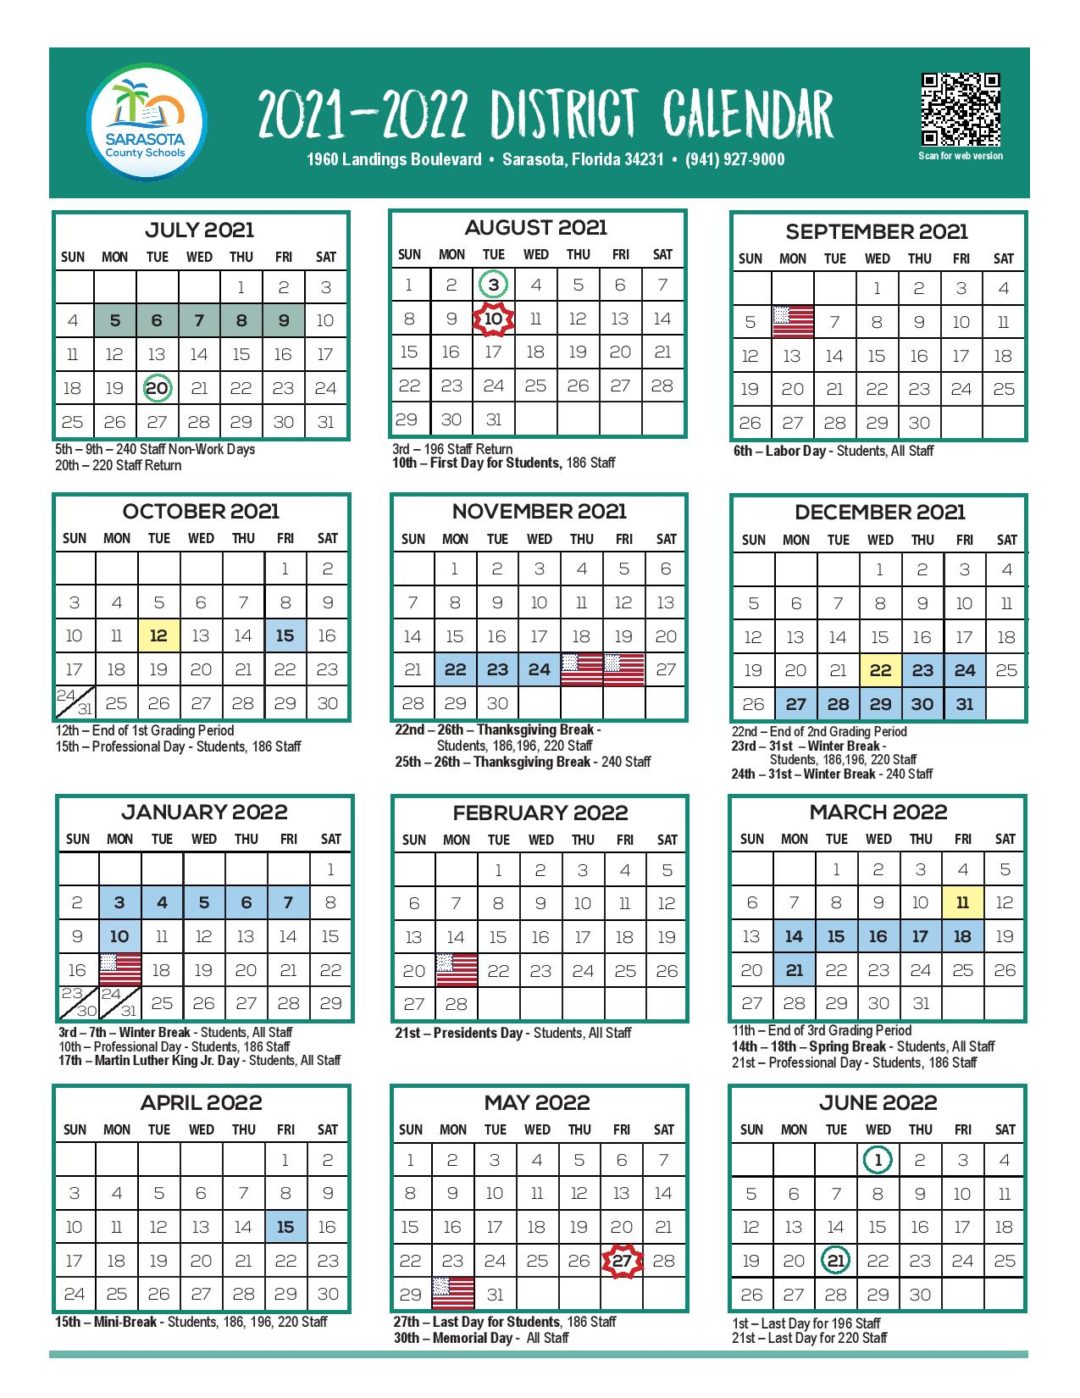 Sarasota County School Calendar 20212022 in PDF